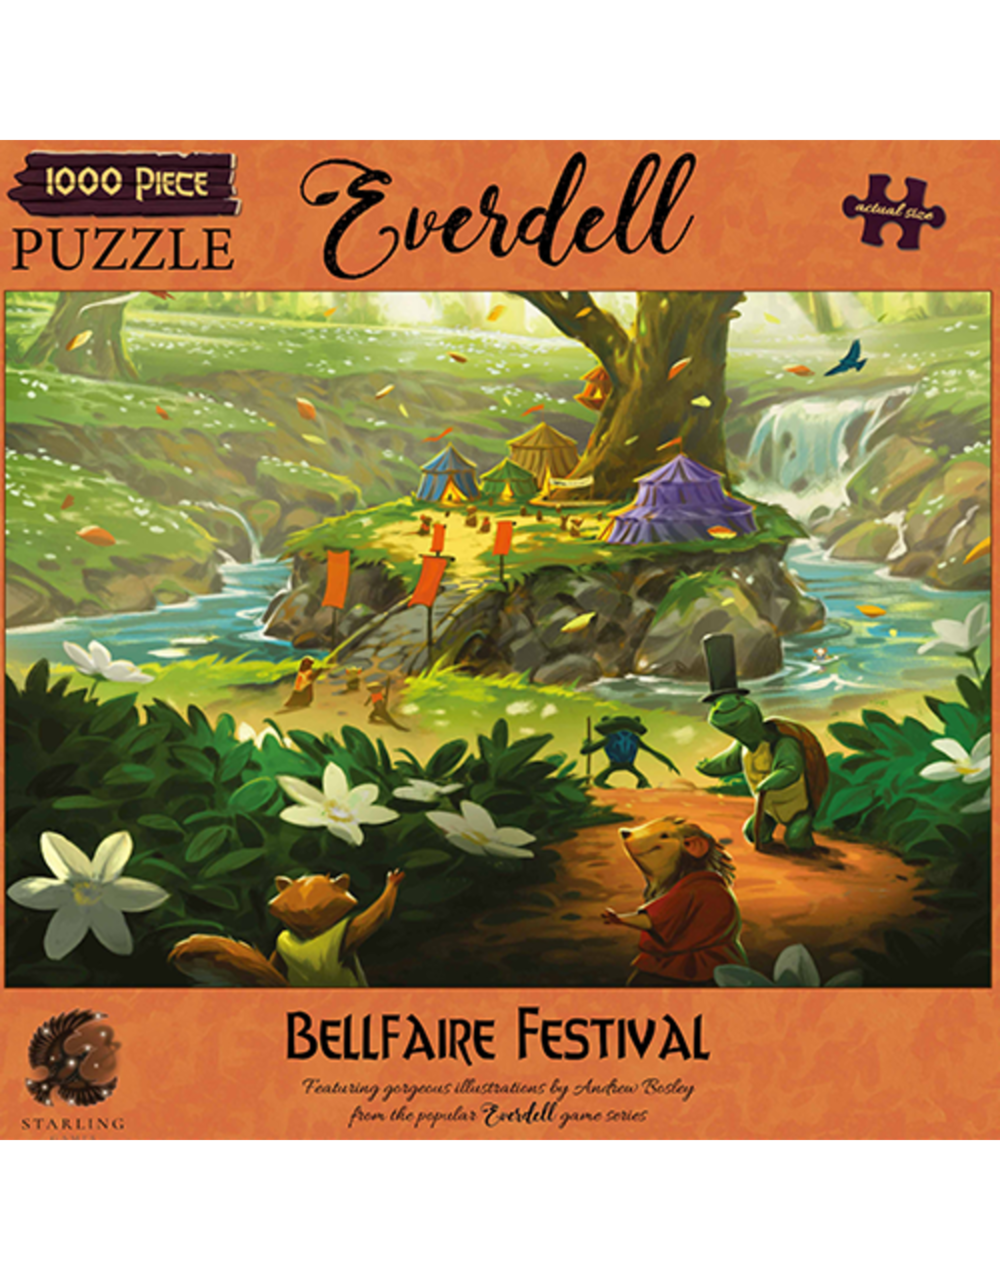 Everdell Puzzle: Bellfaire Festival